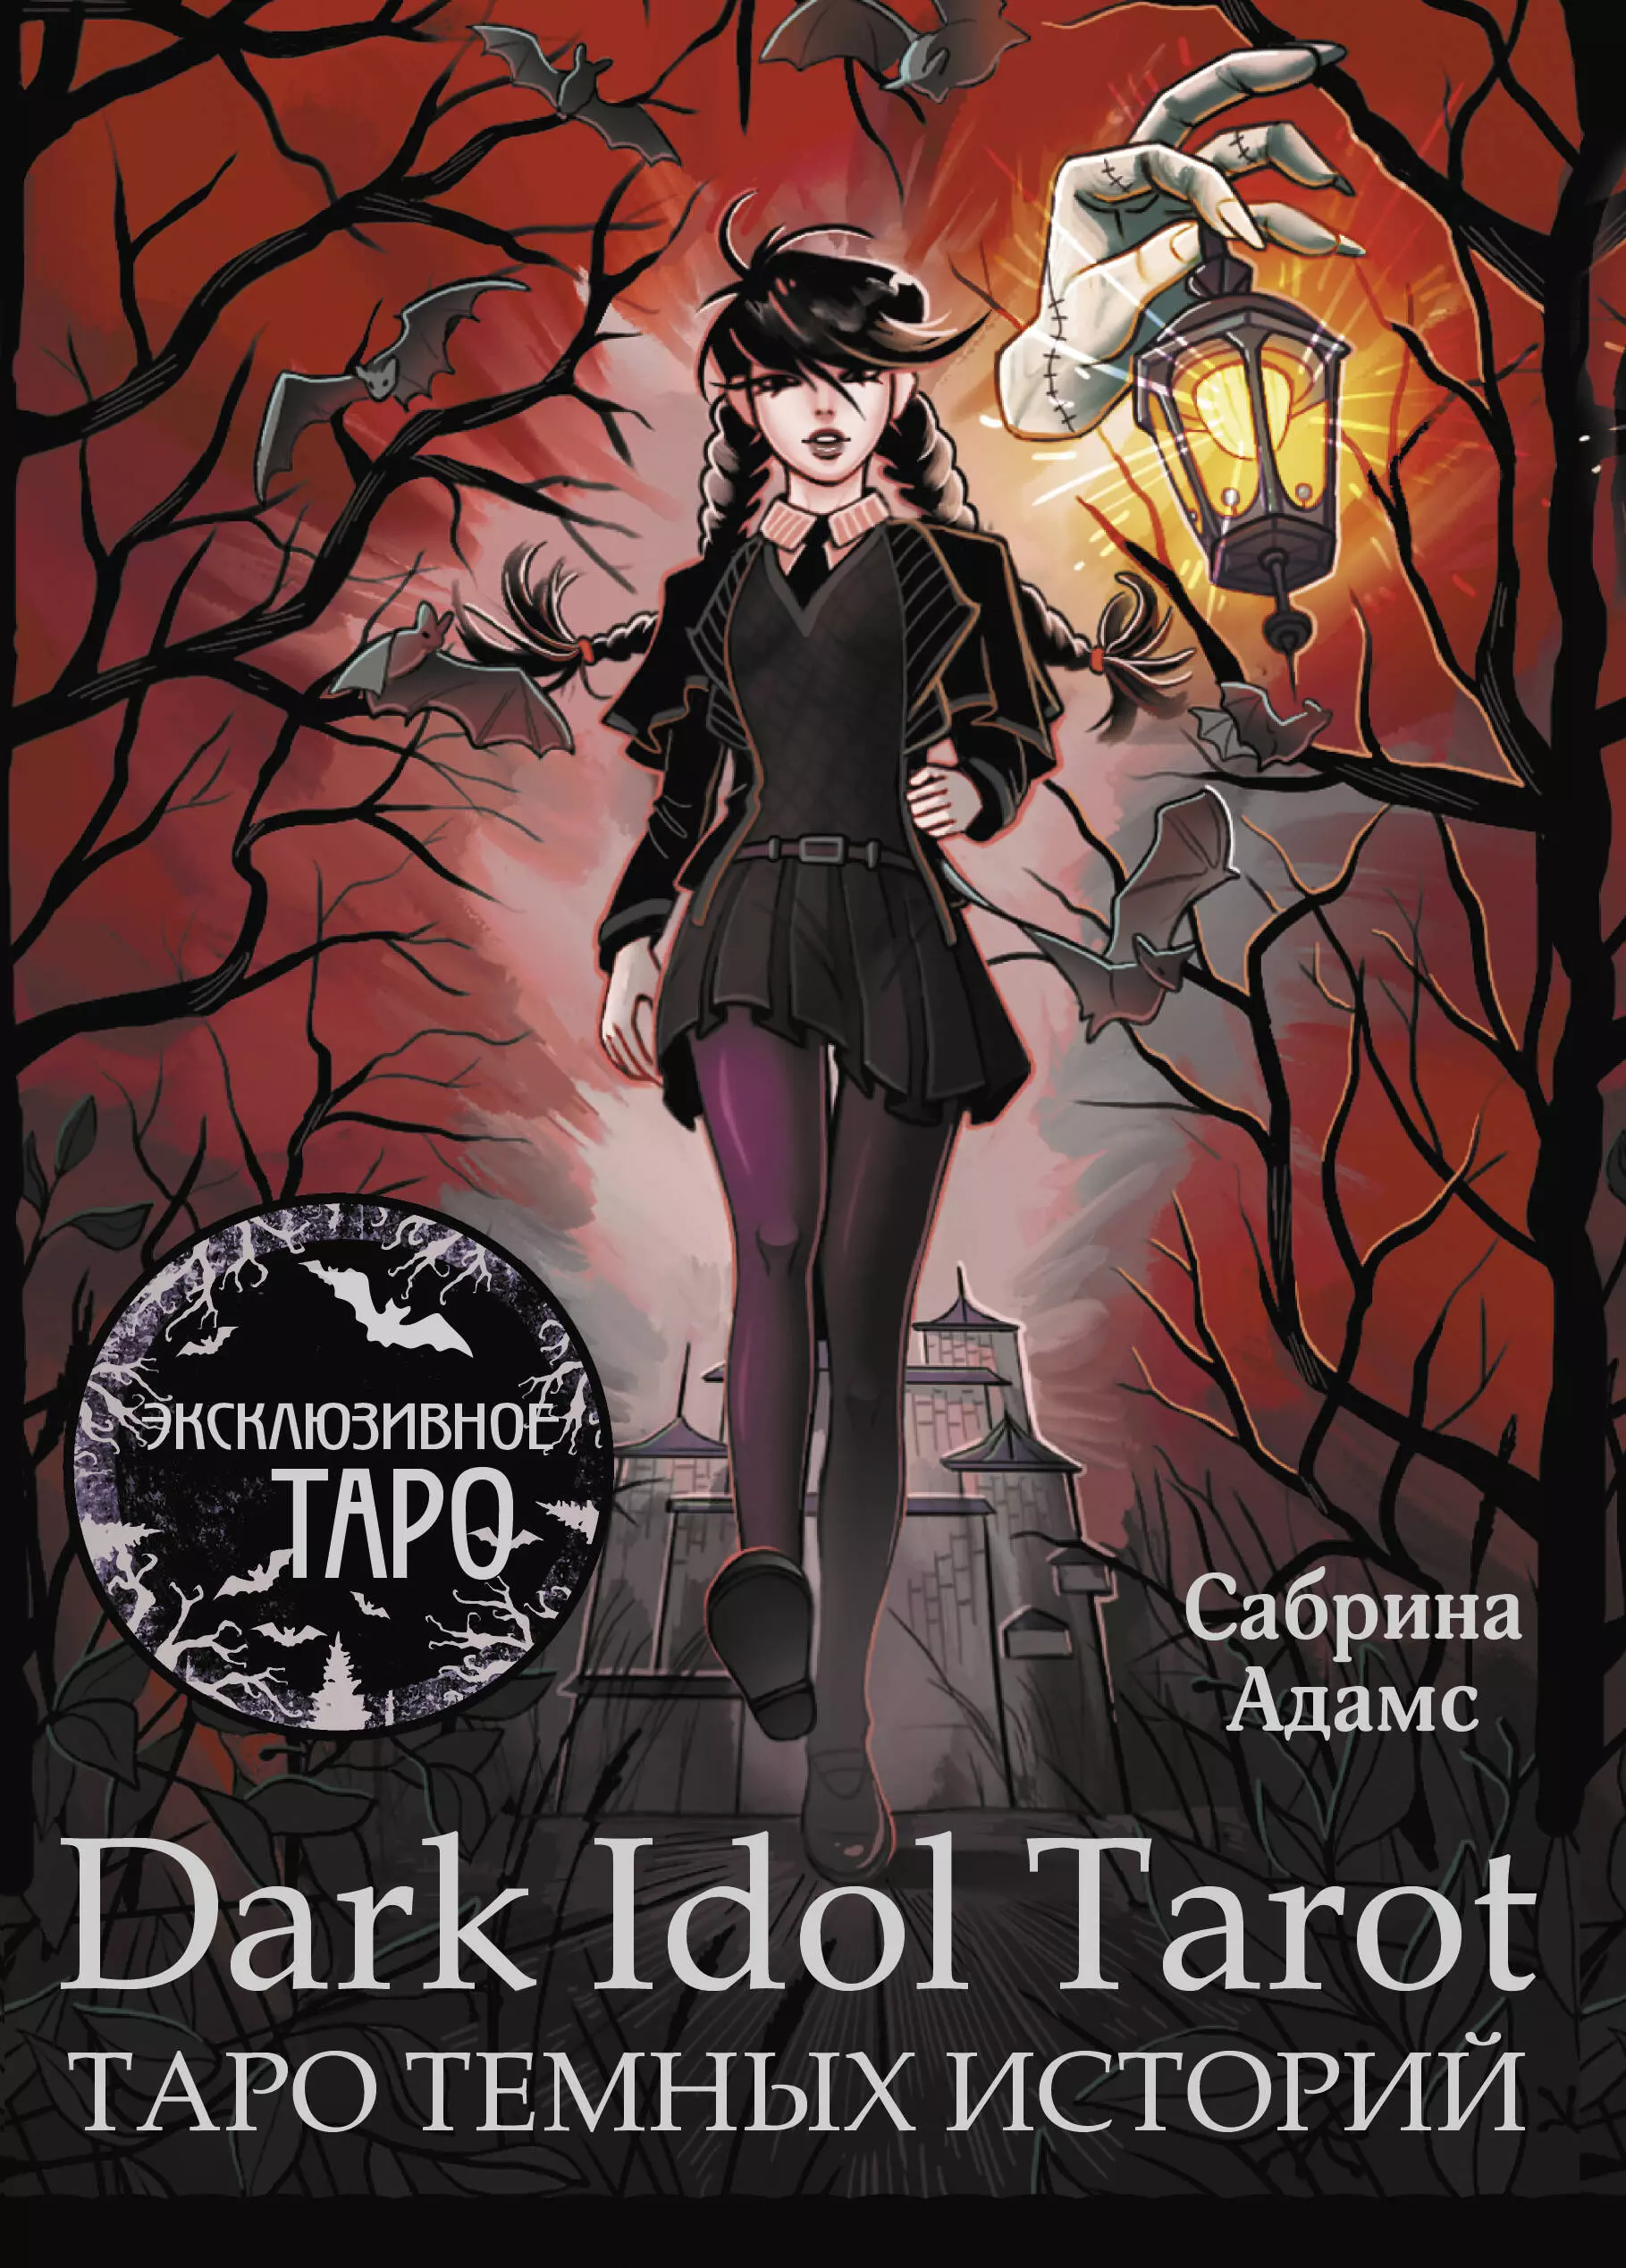 Адамс Сабрина Dark Idol Tarot. Таро темных историй (78 карт и руководство)